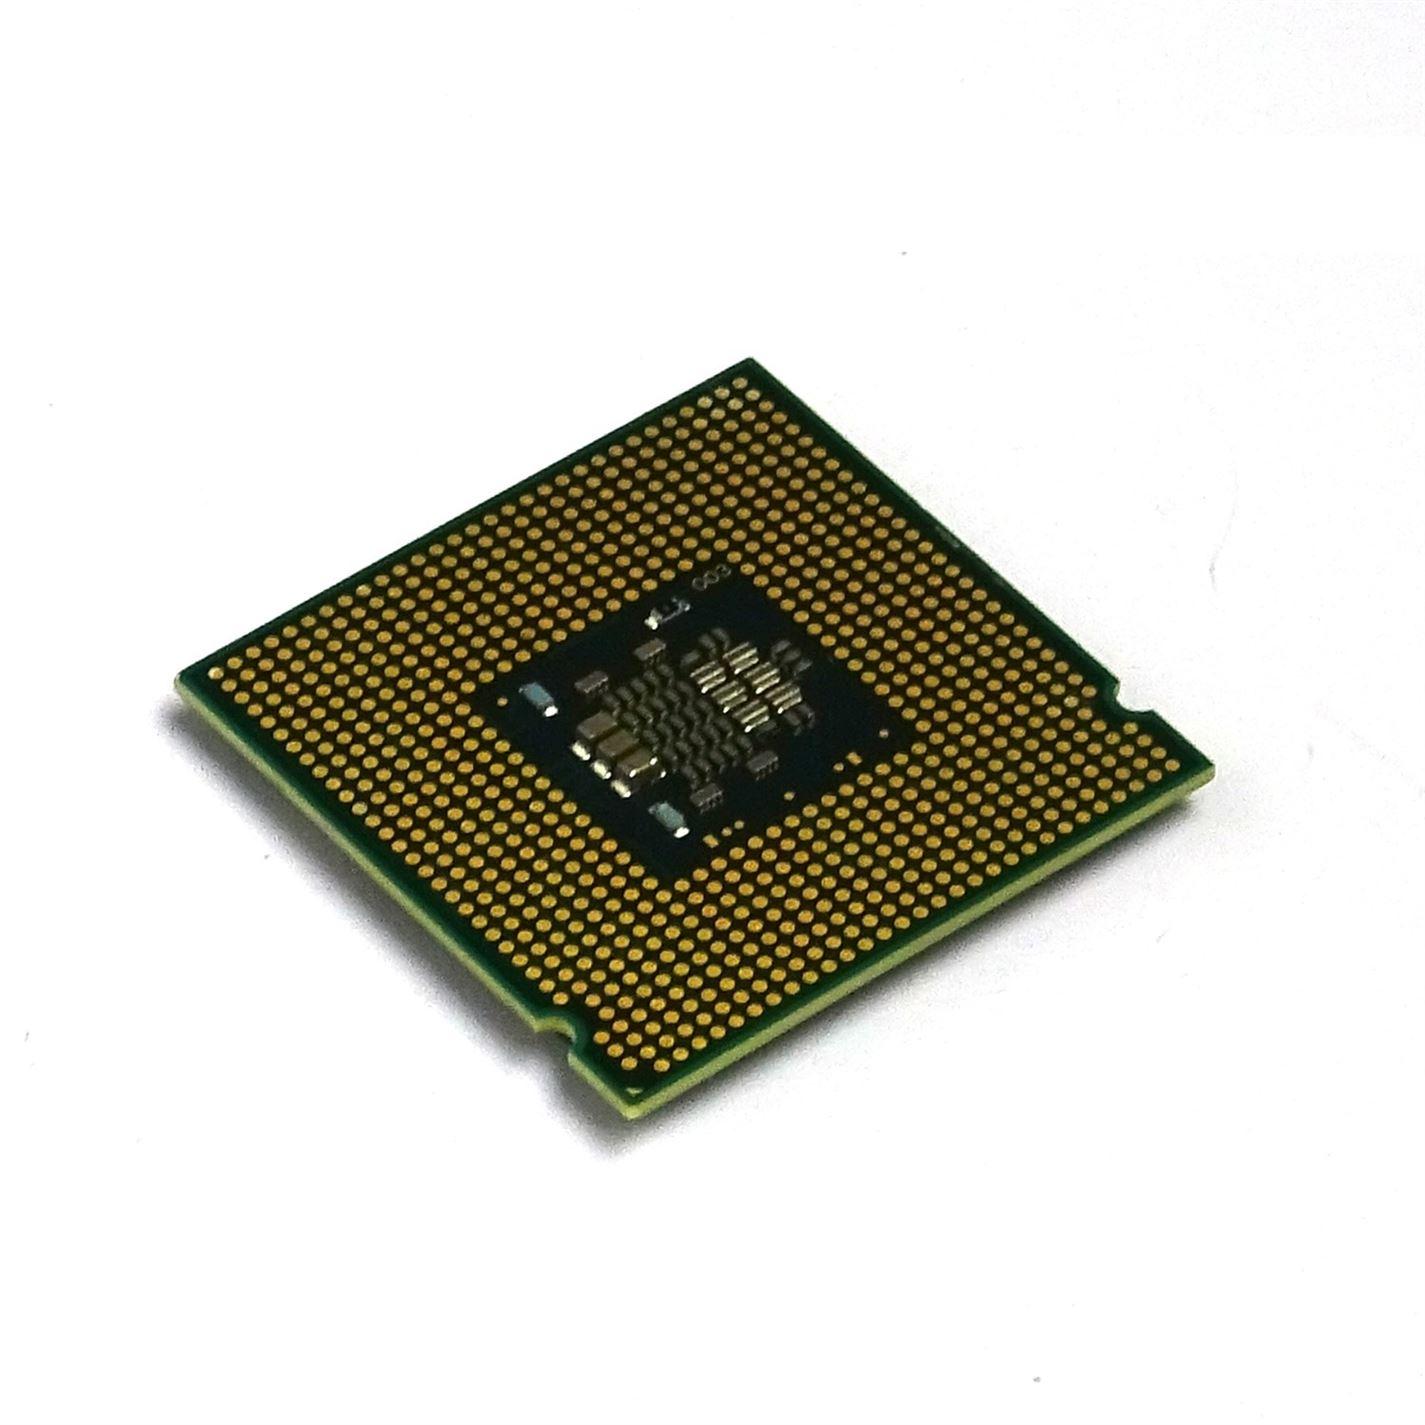 Pre-Owned Intel E2160 - PENTIUM DUAL CORE SLA8Z 1.8Ghz - UK Seller